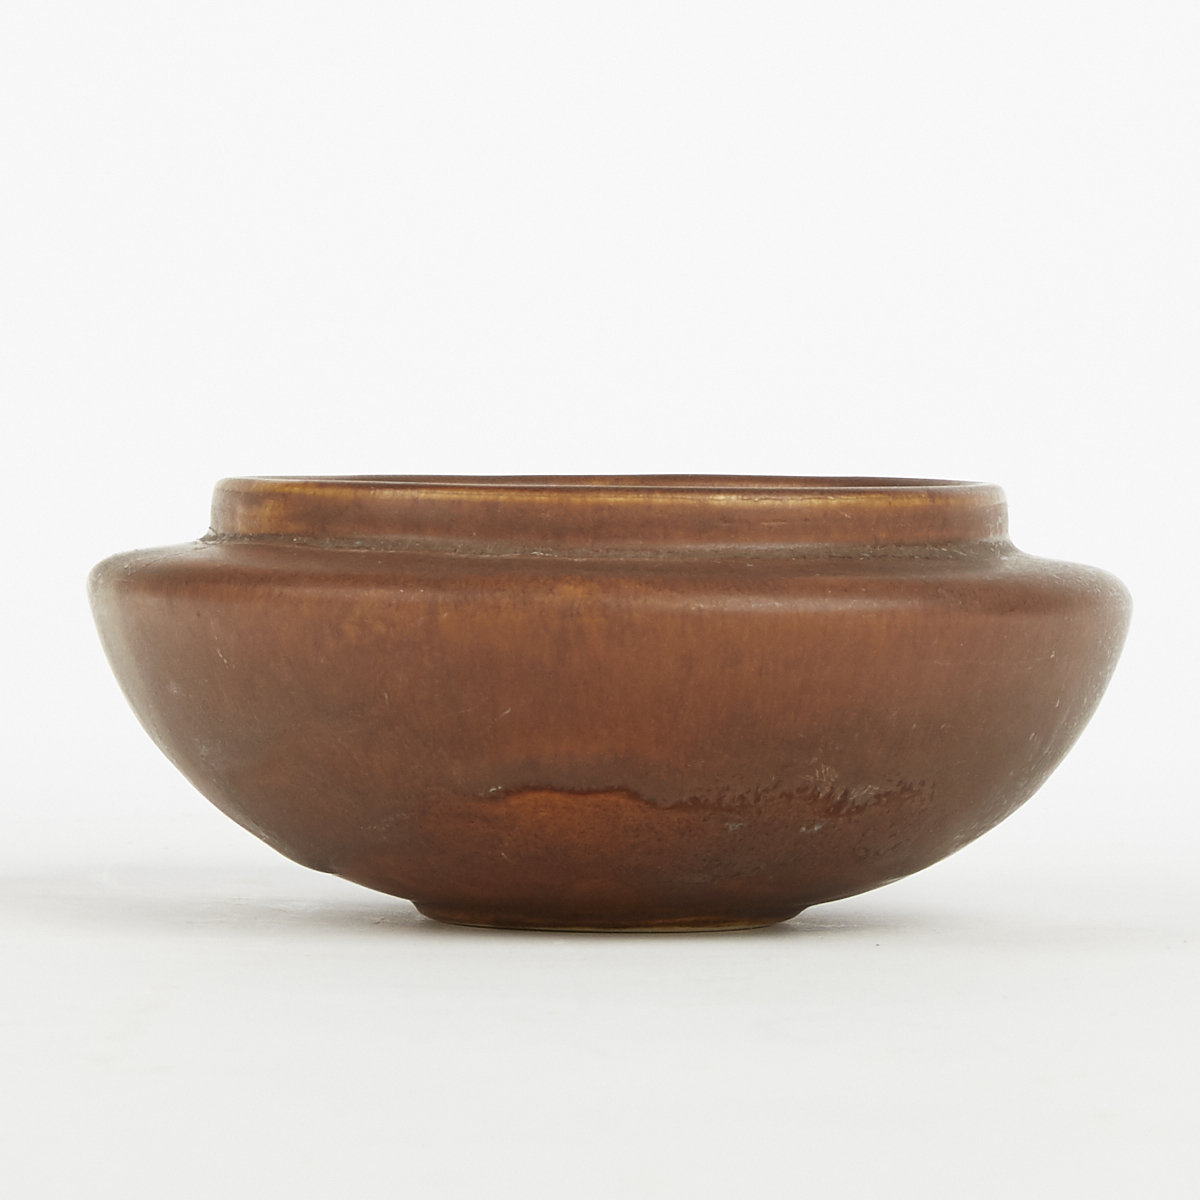 University of North Dakota 1912 Pottery Bowl - Image 3 of 5